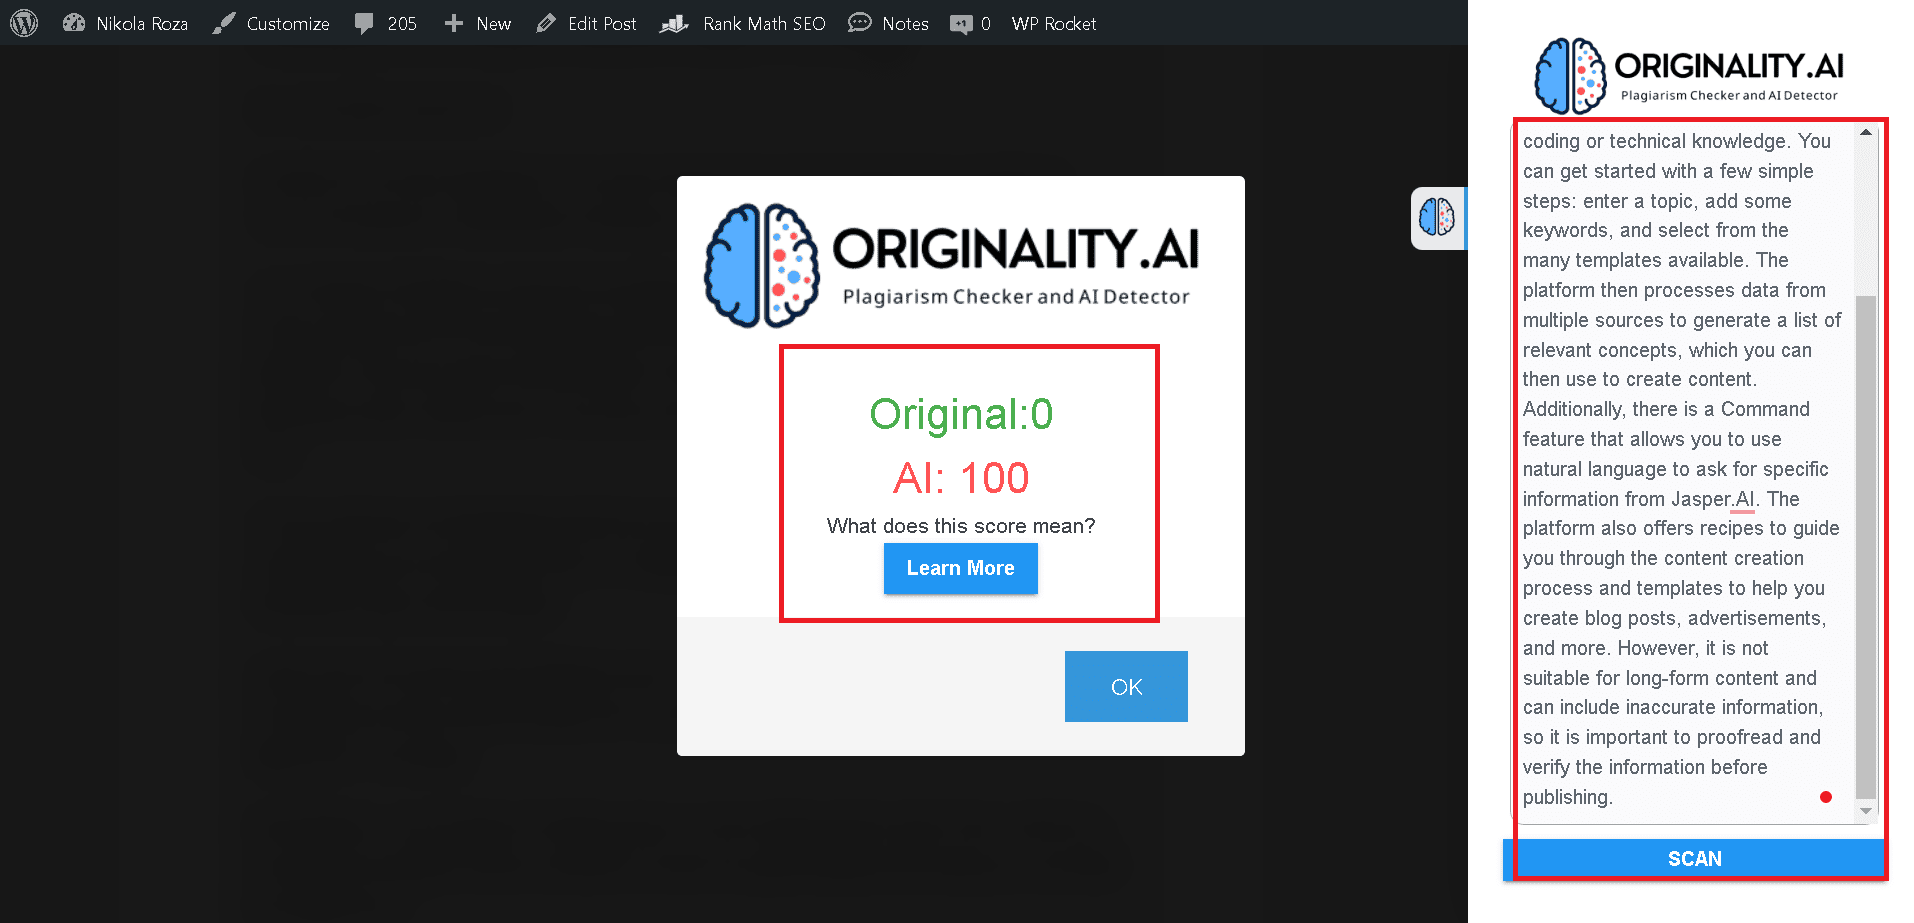 Originality.ai can easily detect AI content written by Jasper AI